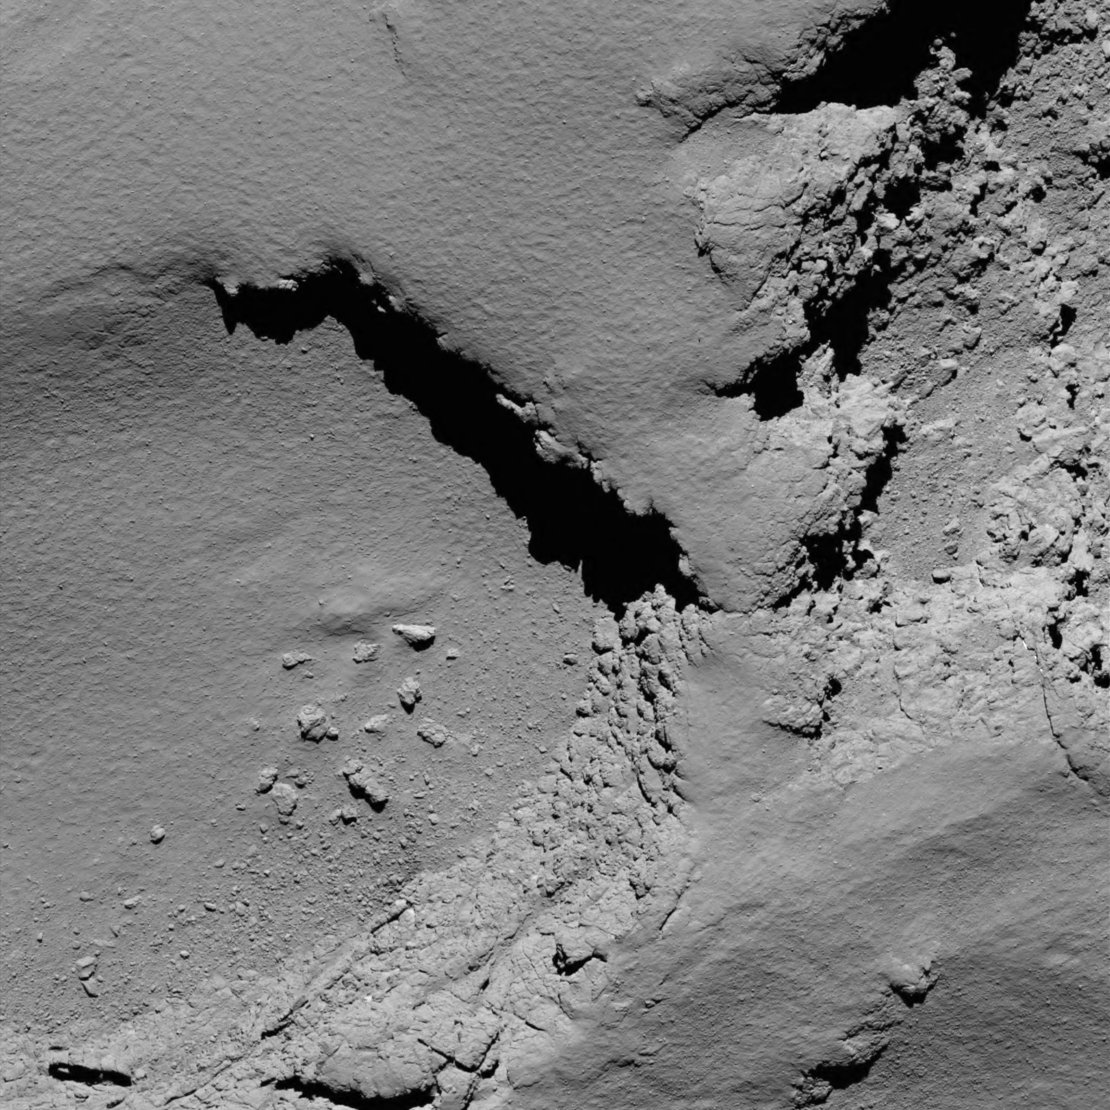 Rosetta 3.6 miles (5.8 km) from Comet 67P